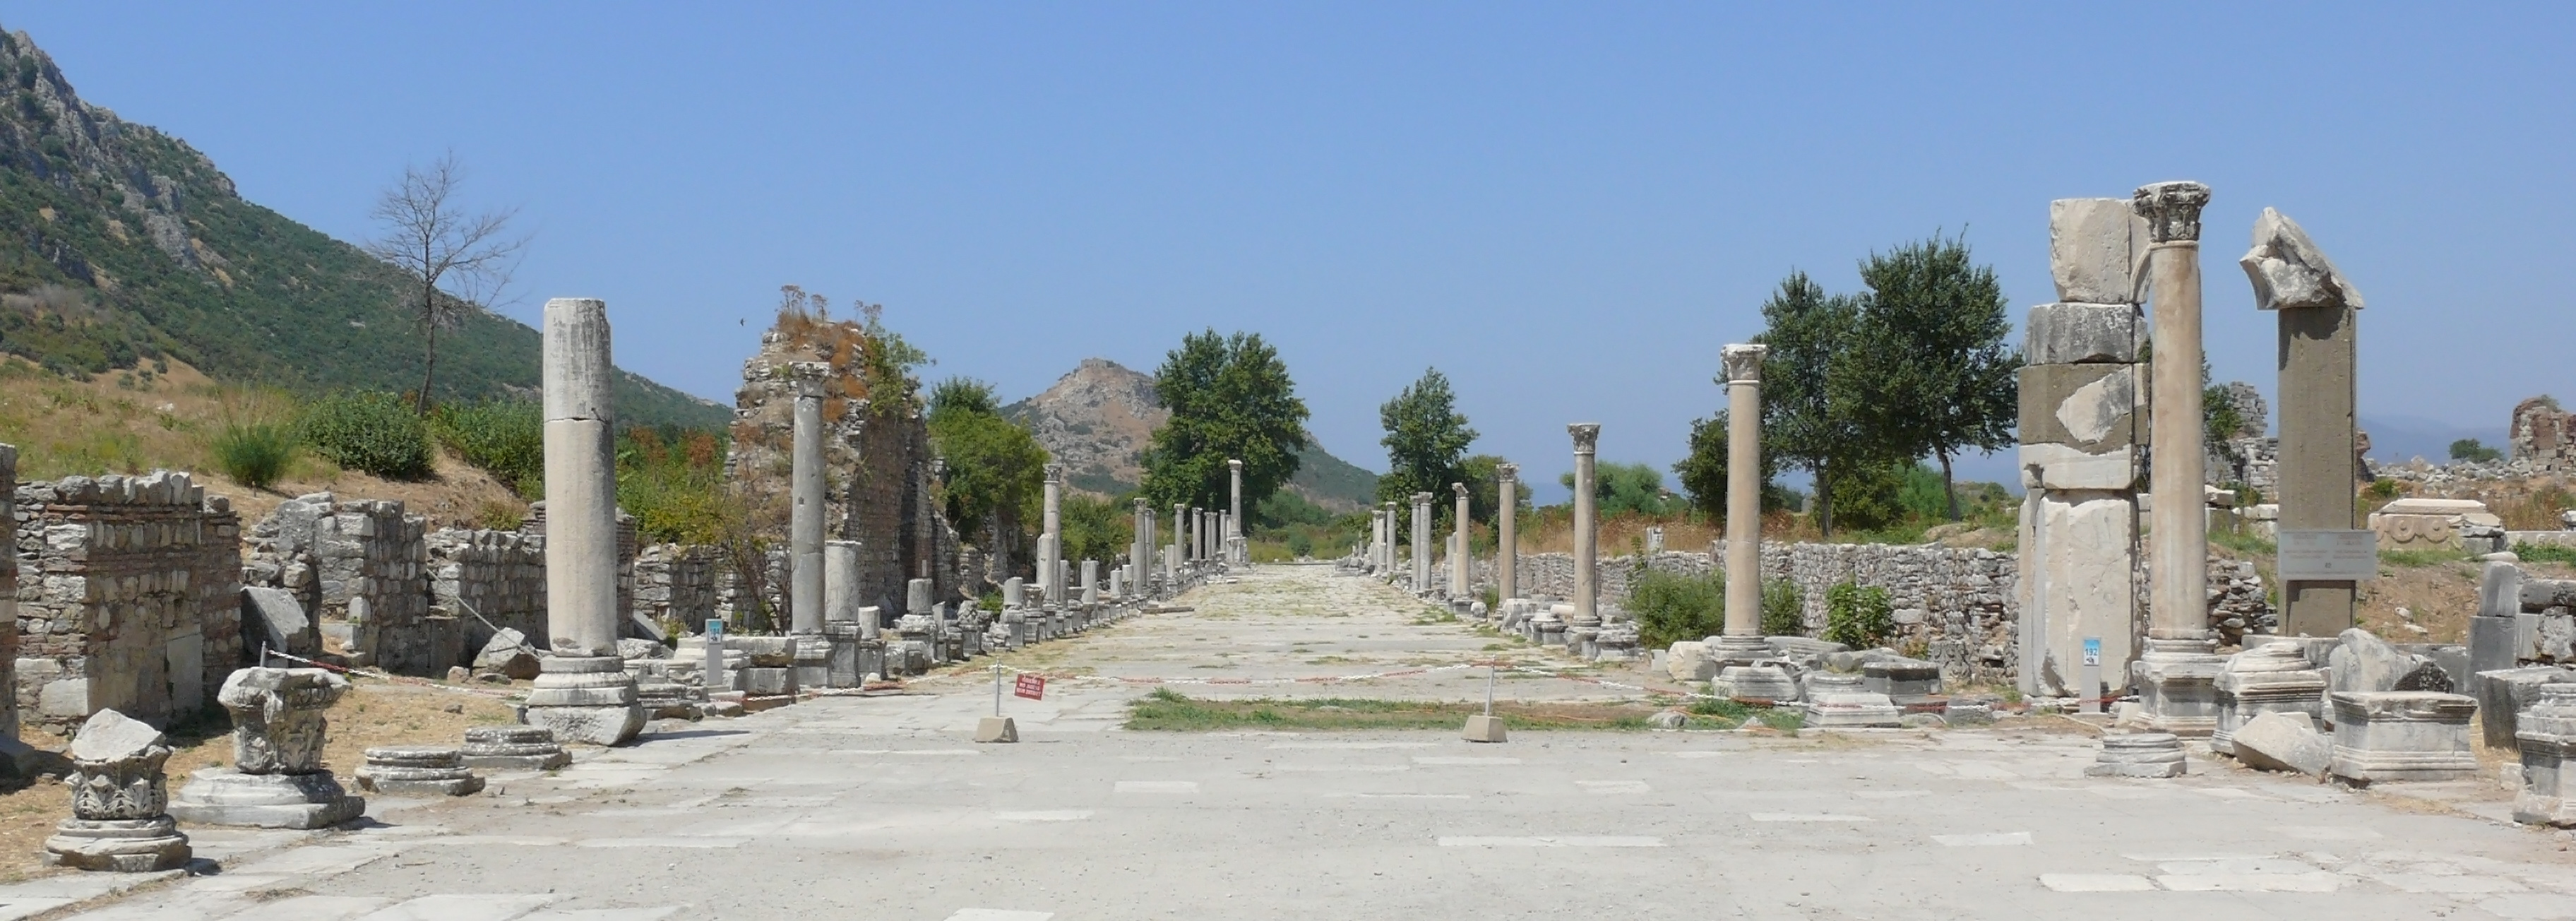 Ephesus_street_scene.jpg